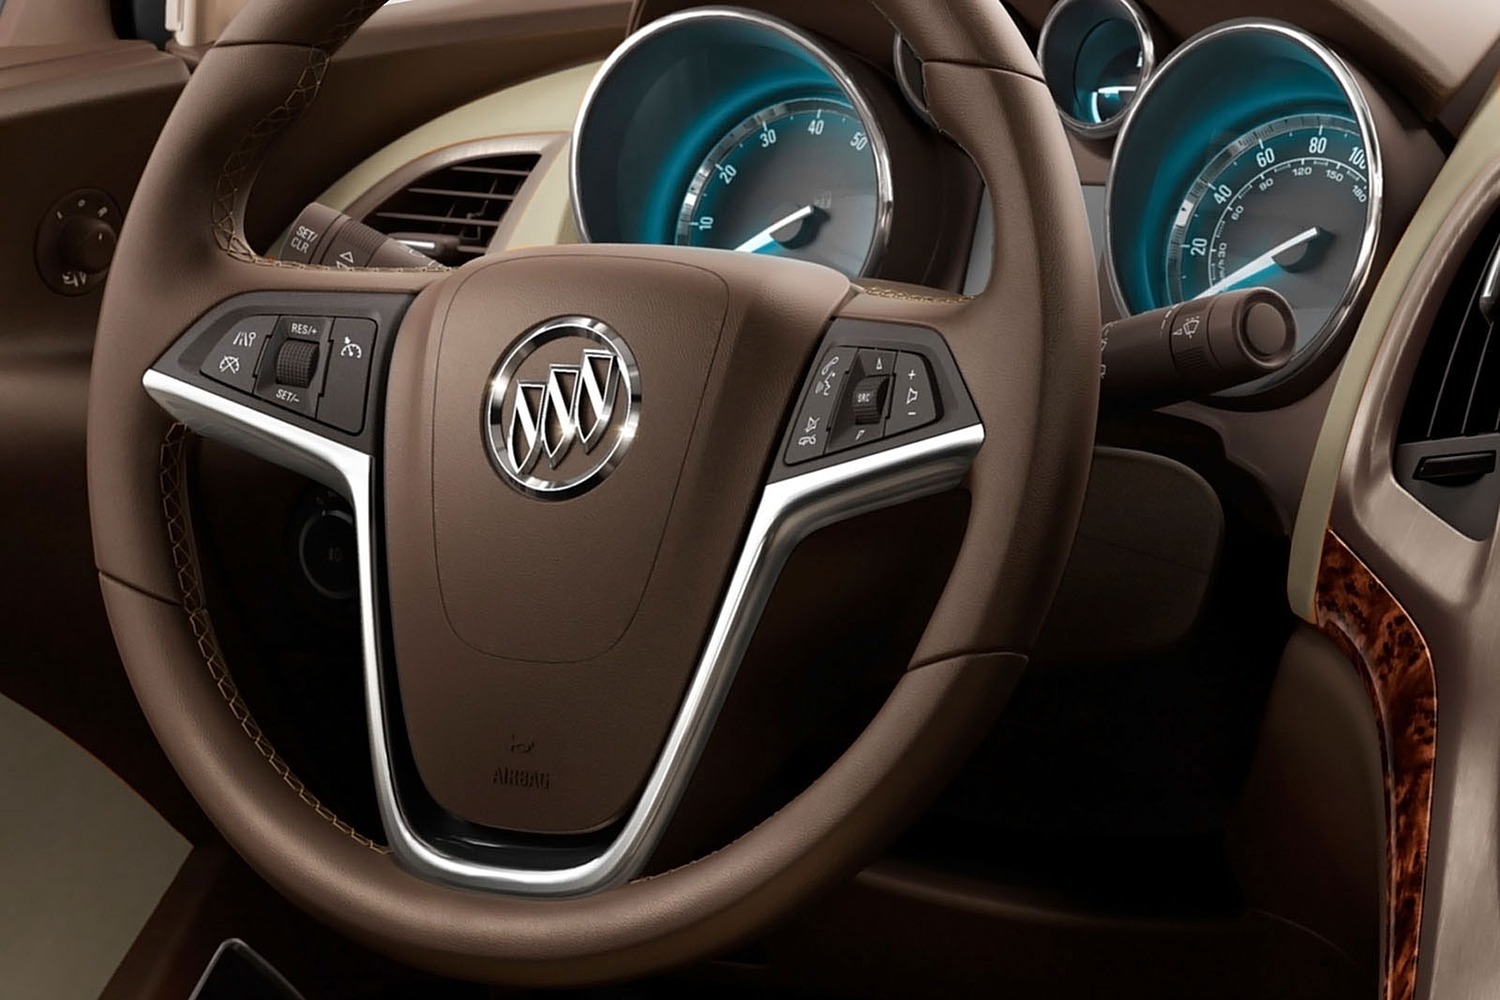 Buick Verano Leather Group Sedan Steering Wheel Detail Shown (2015 model year shown)